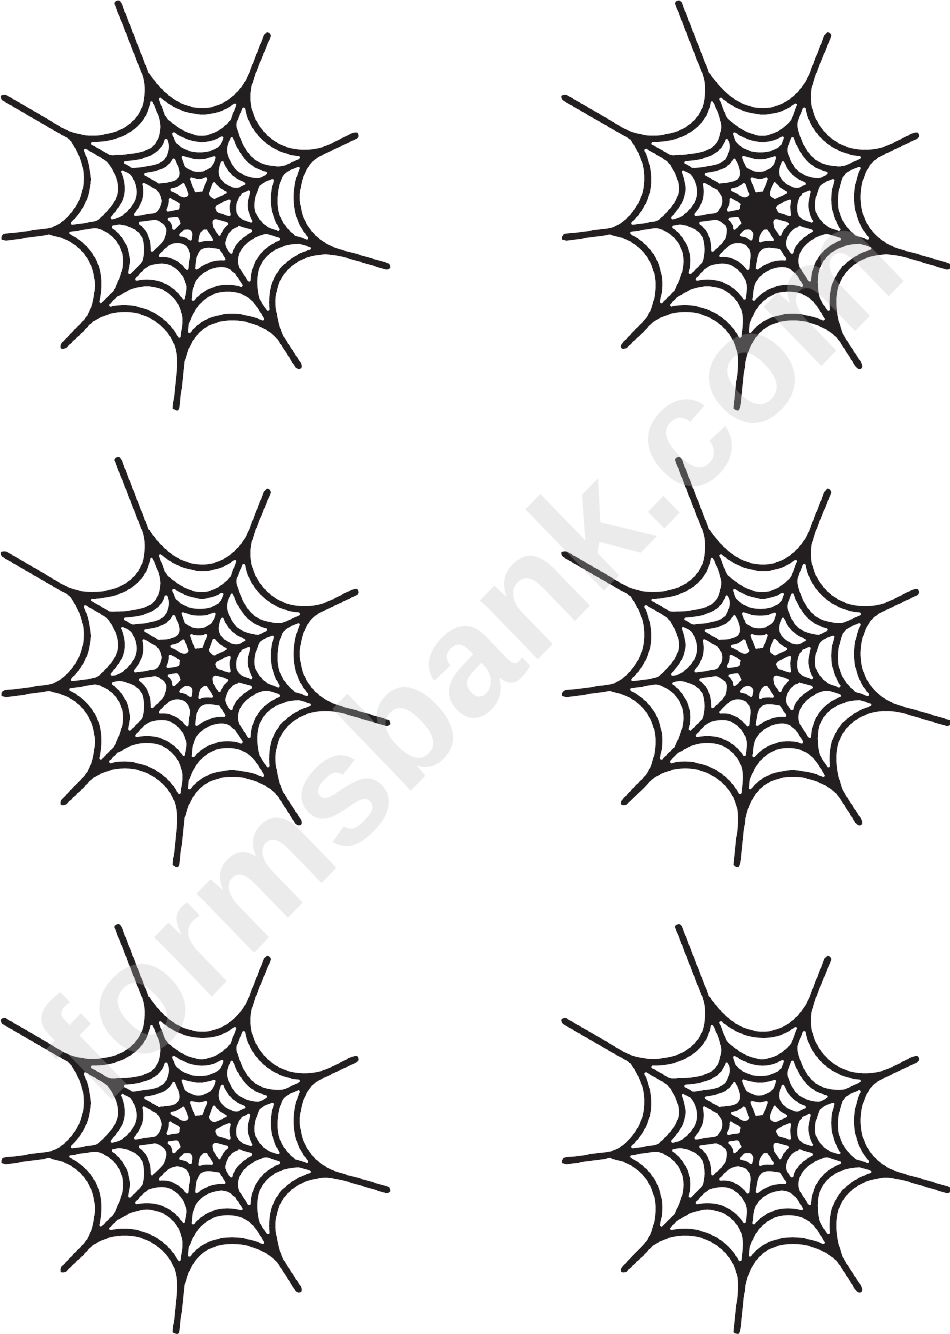 Small Spiderweb Templates printable pdf download